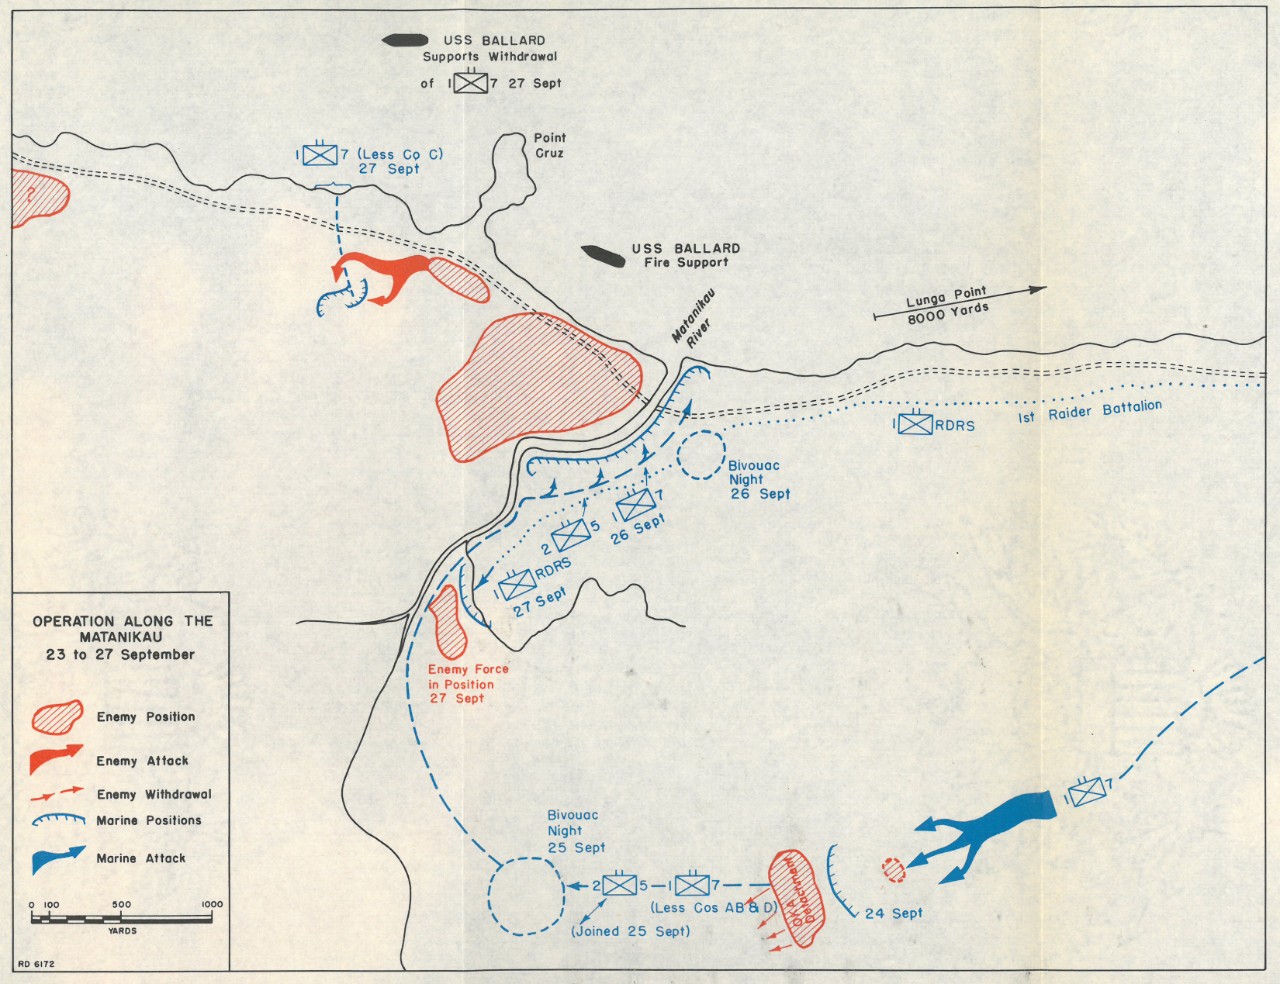 Map 11: Operation Along the Matanikau, 23 to 27 September.